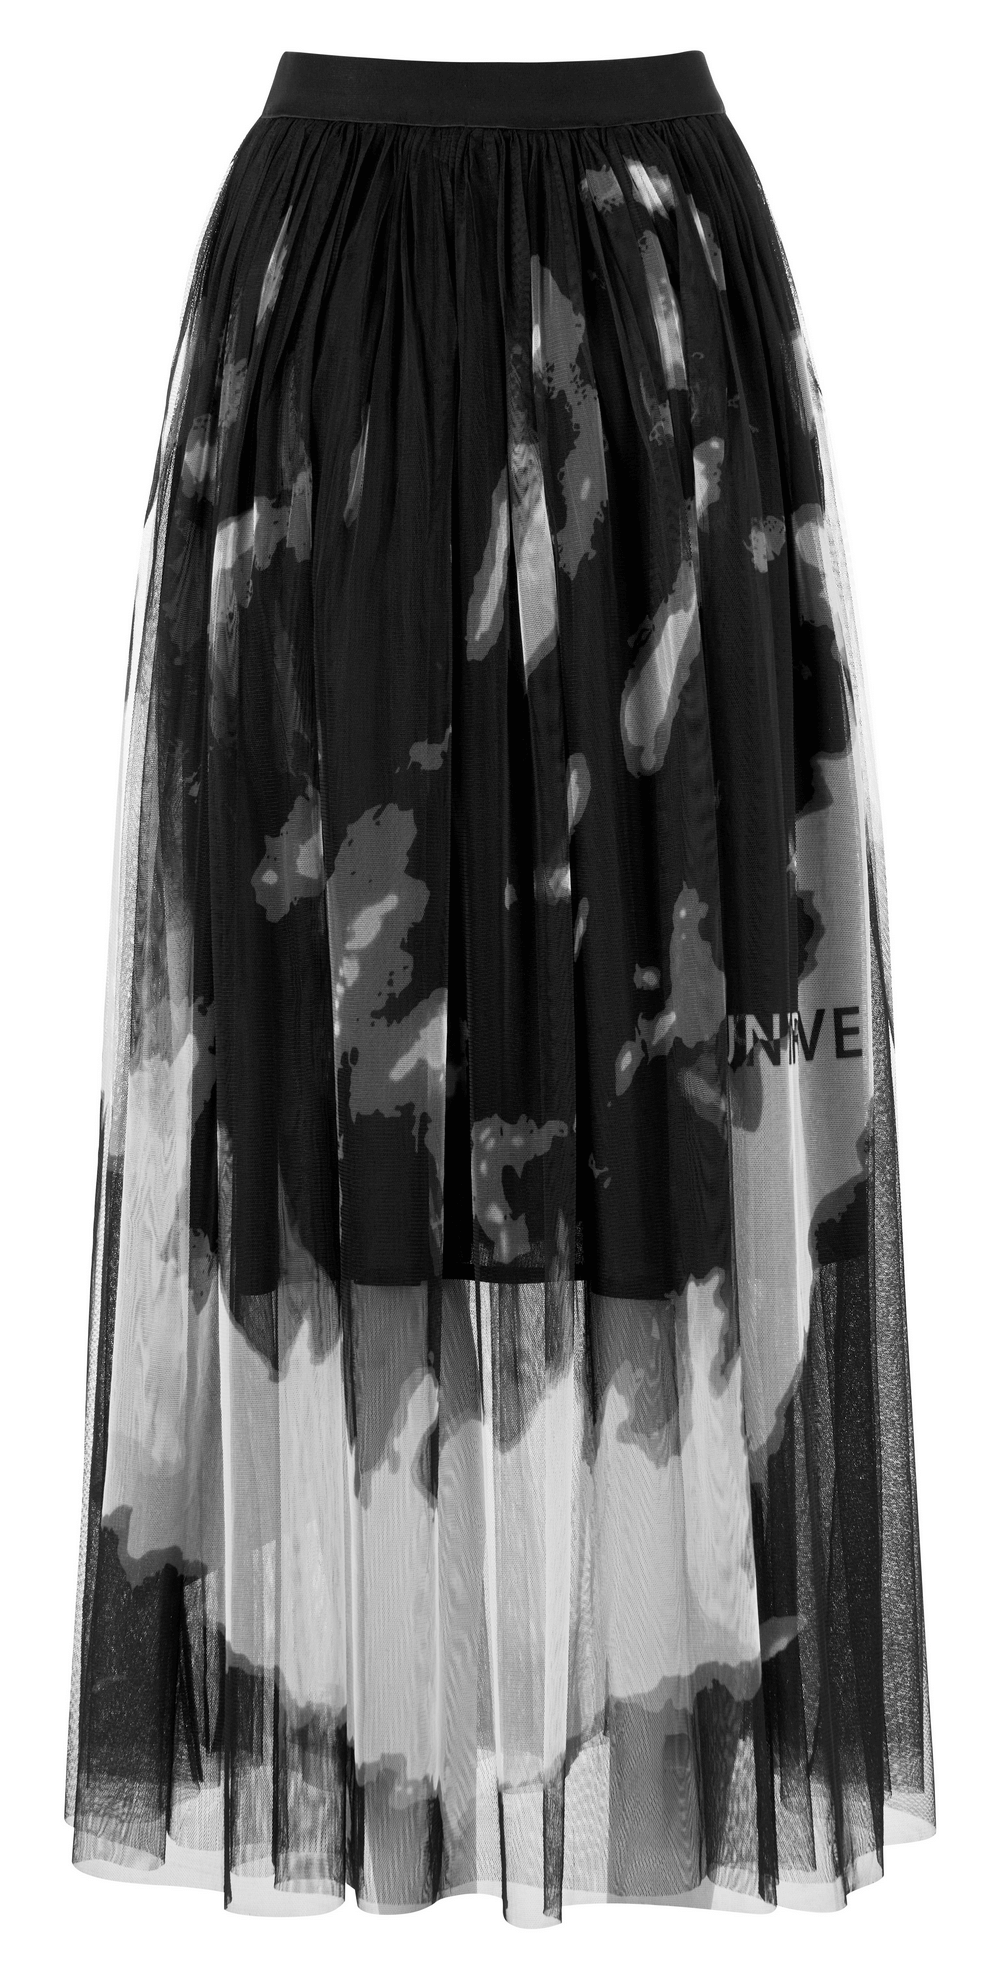 Urban Edgy Tie-Dye Pleated Punk Rave Midi Skirt